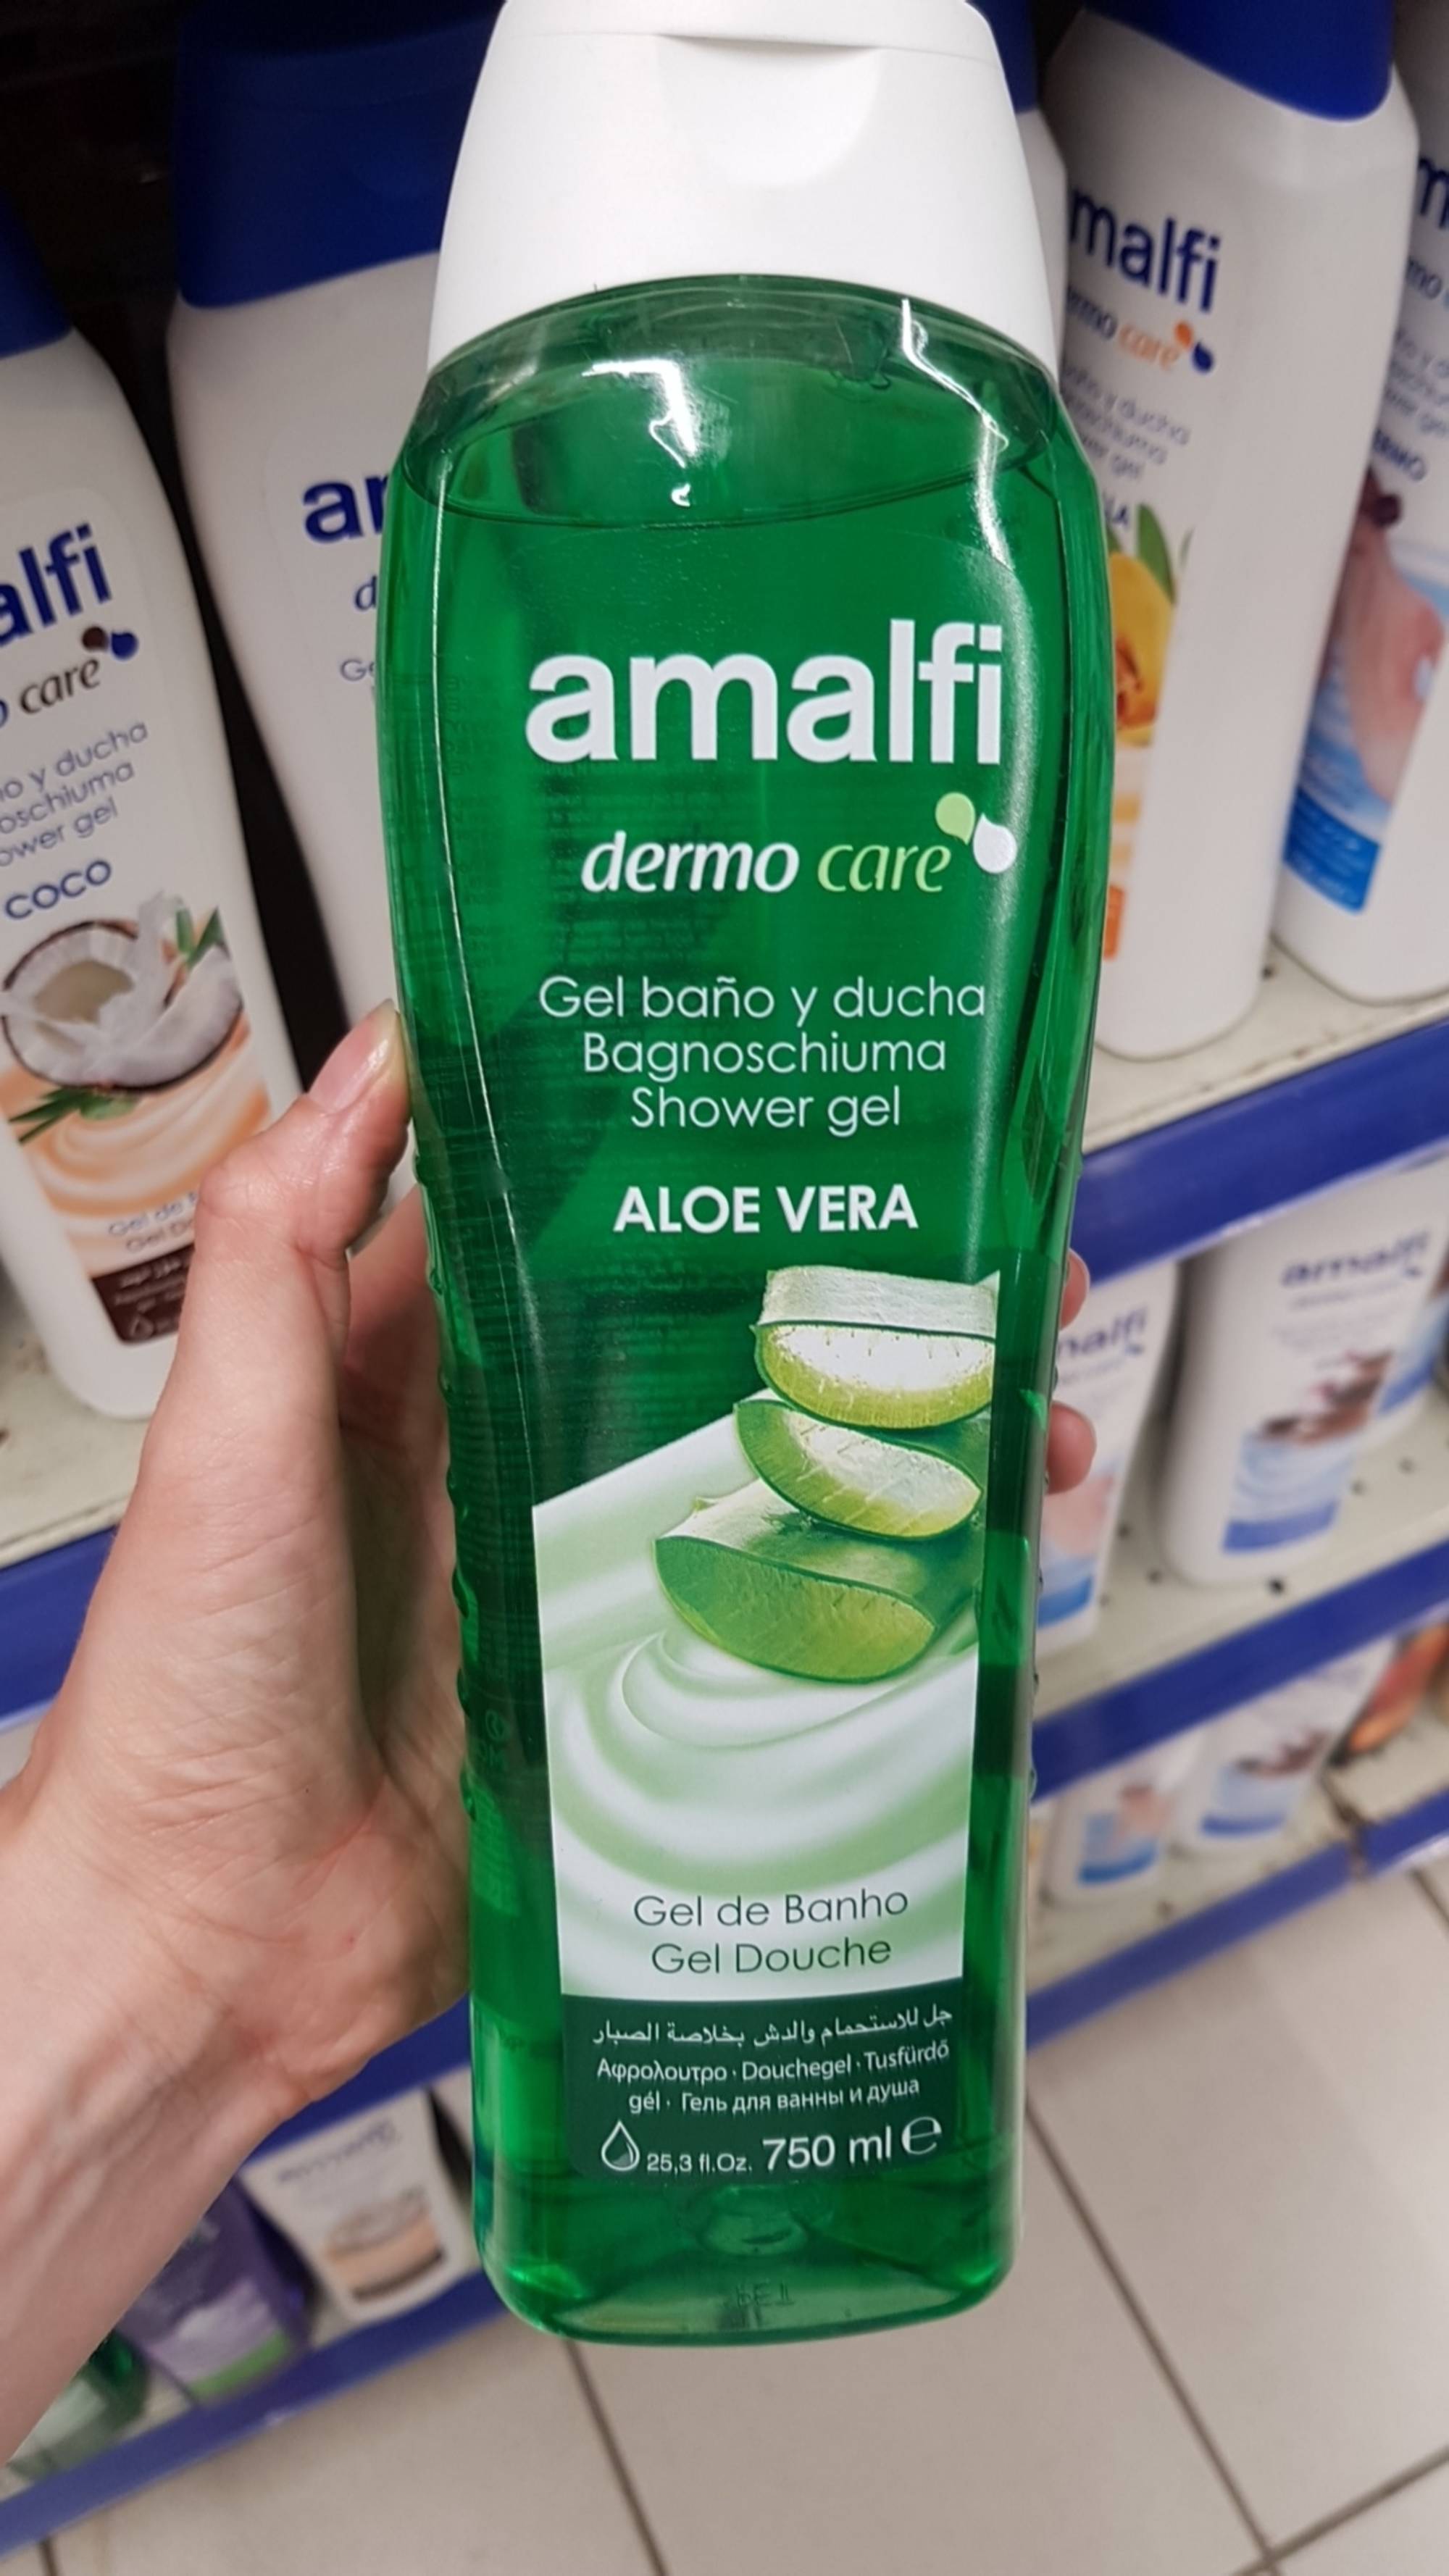 AMALFI - Aloe vera - Shower gel